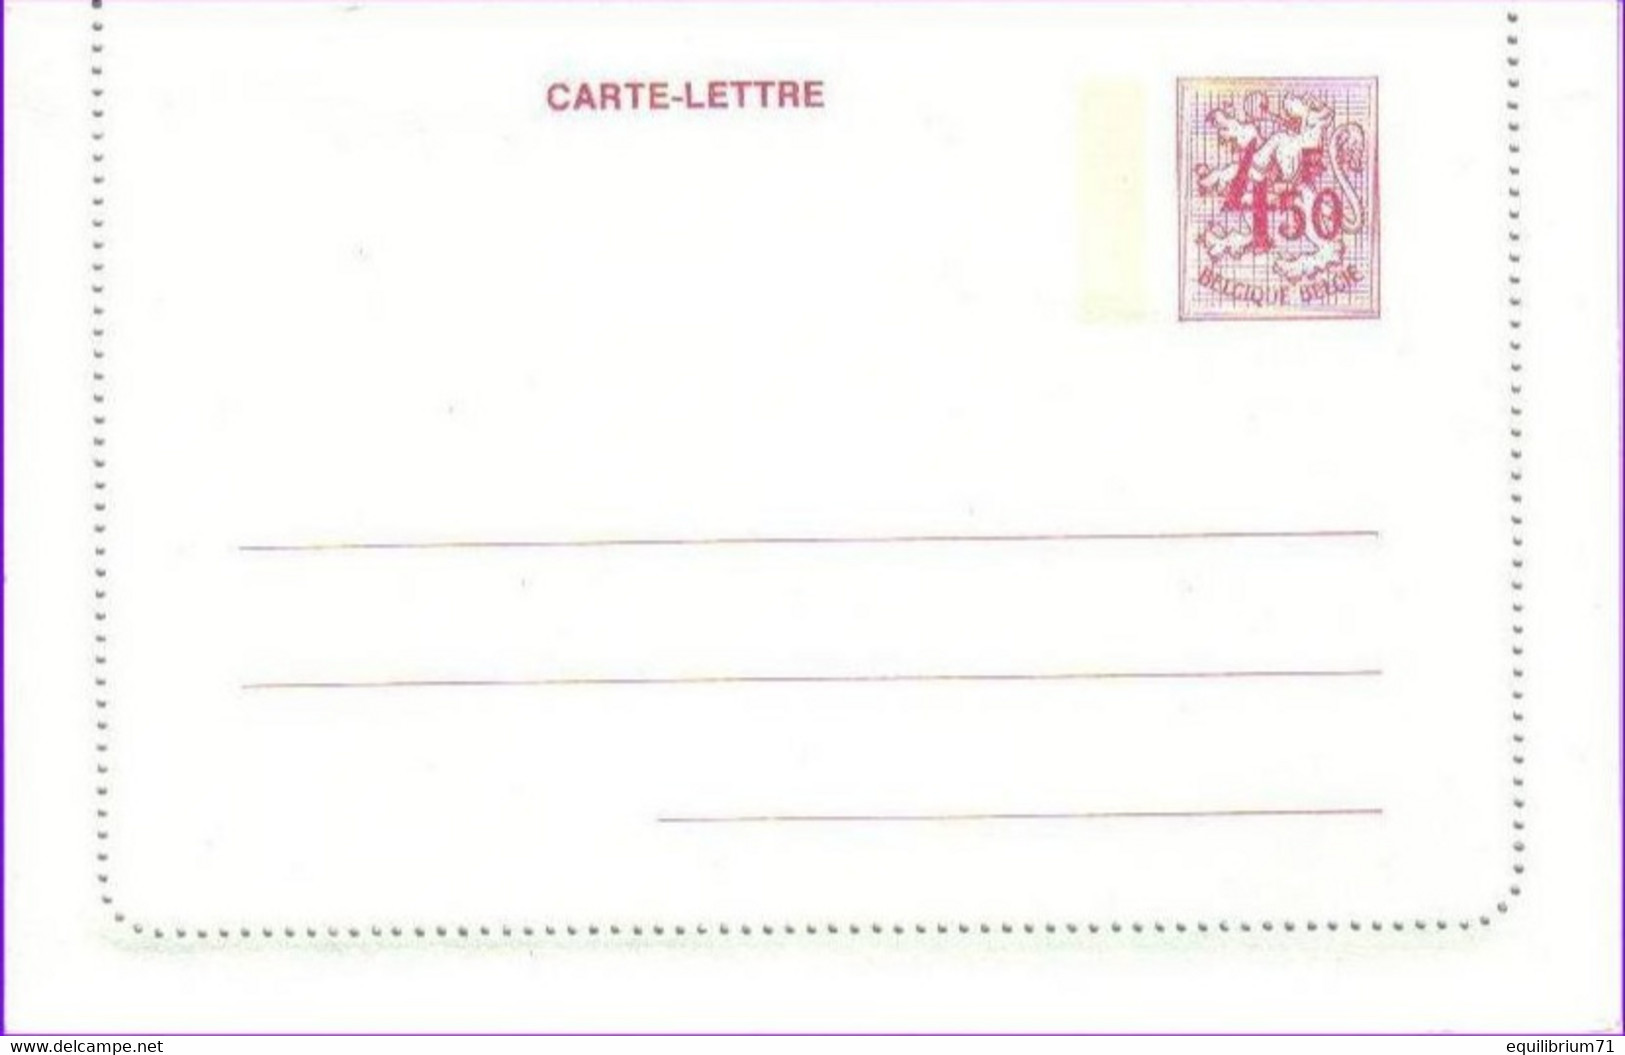 CL / KB 42F - 4,50fr - Carte-Lettre / Kaartbrief - 1972 - NEUF / NIEUW - Cartes-lettres